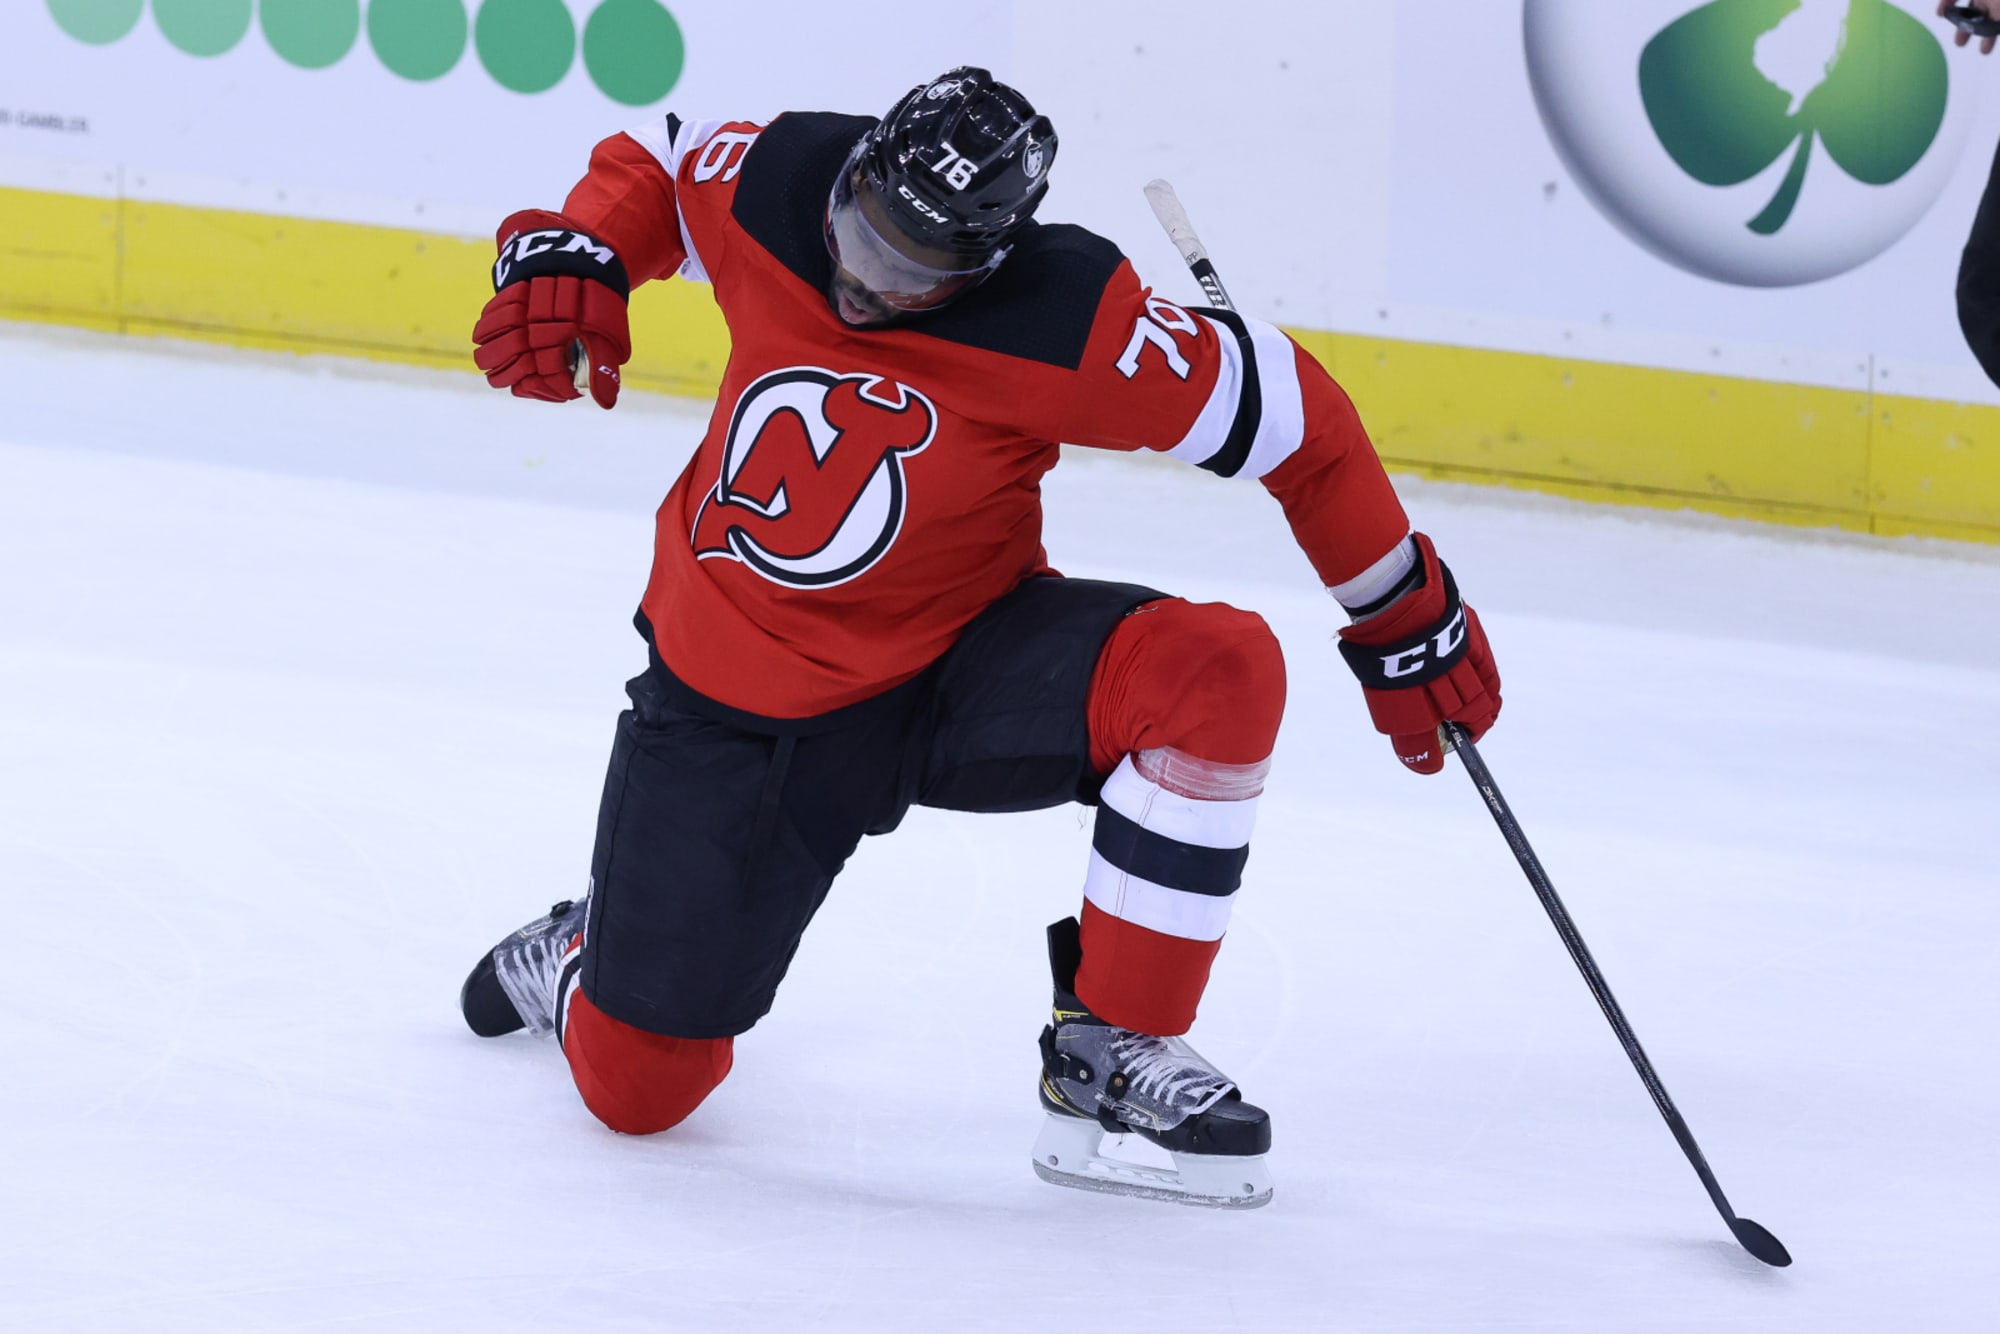 New Jersey Devils Player P.K. Subban's Biggest Charitable Efforts